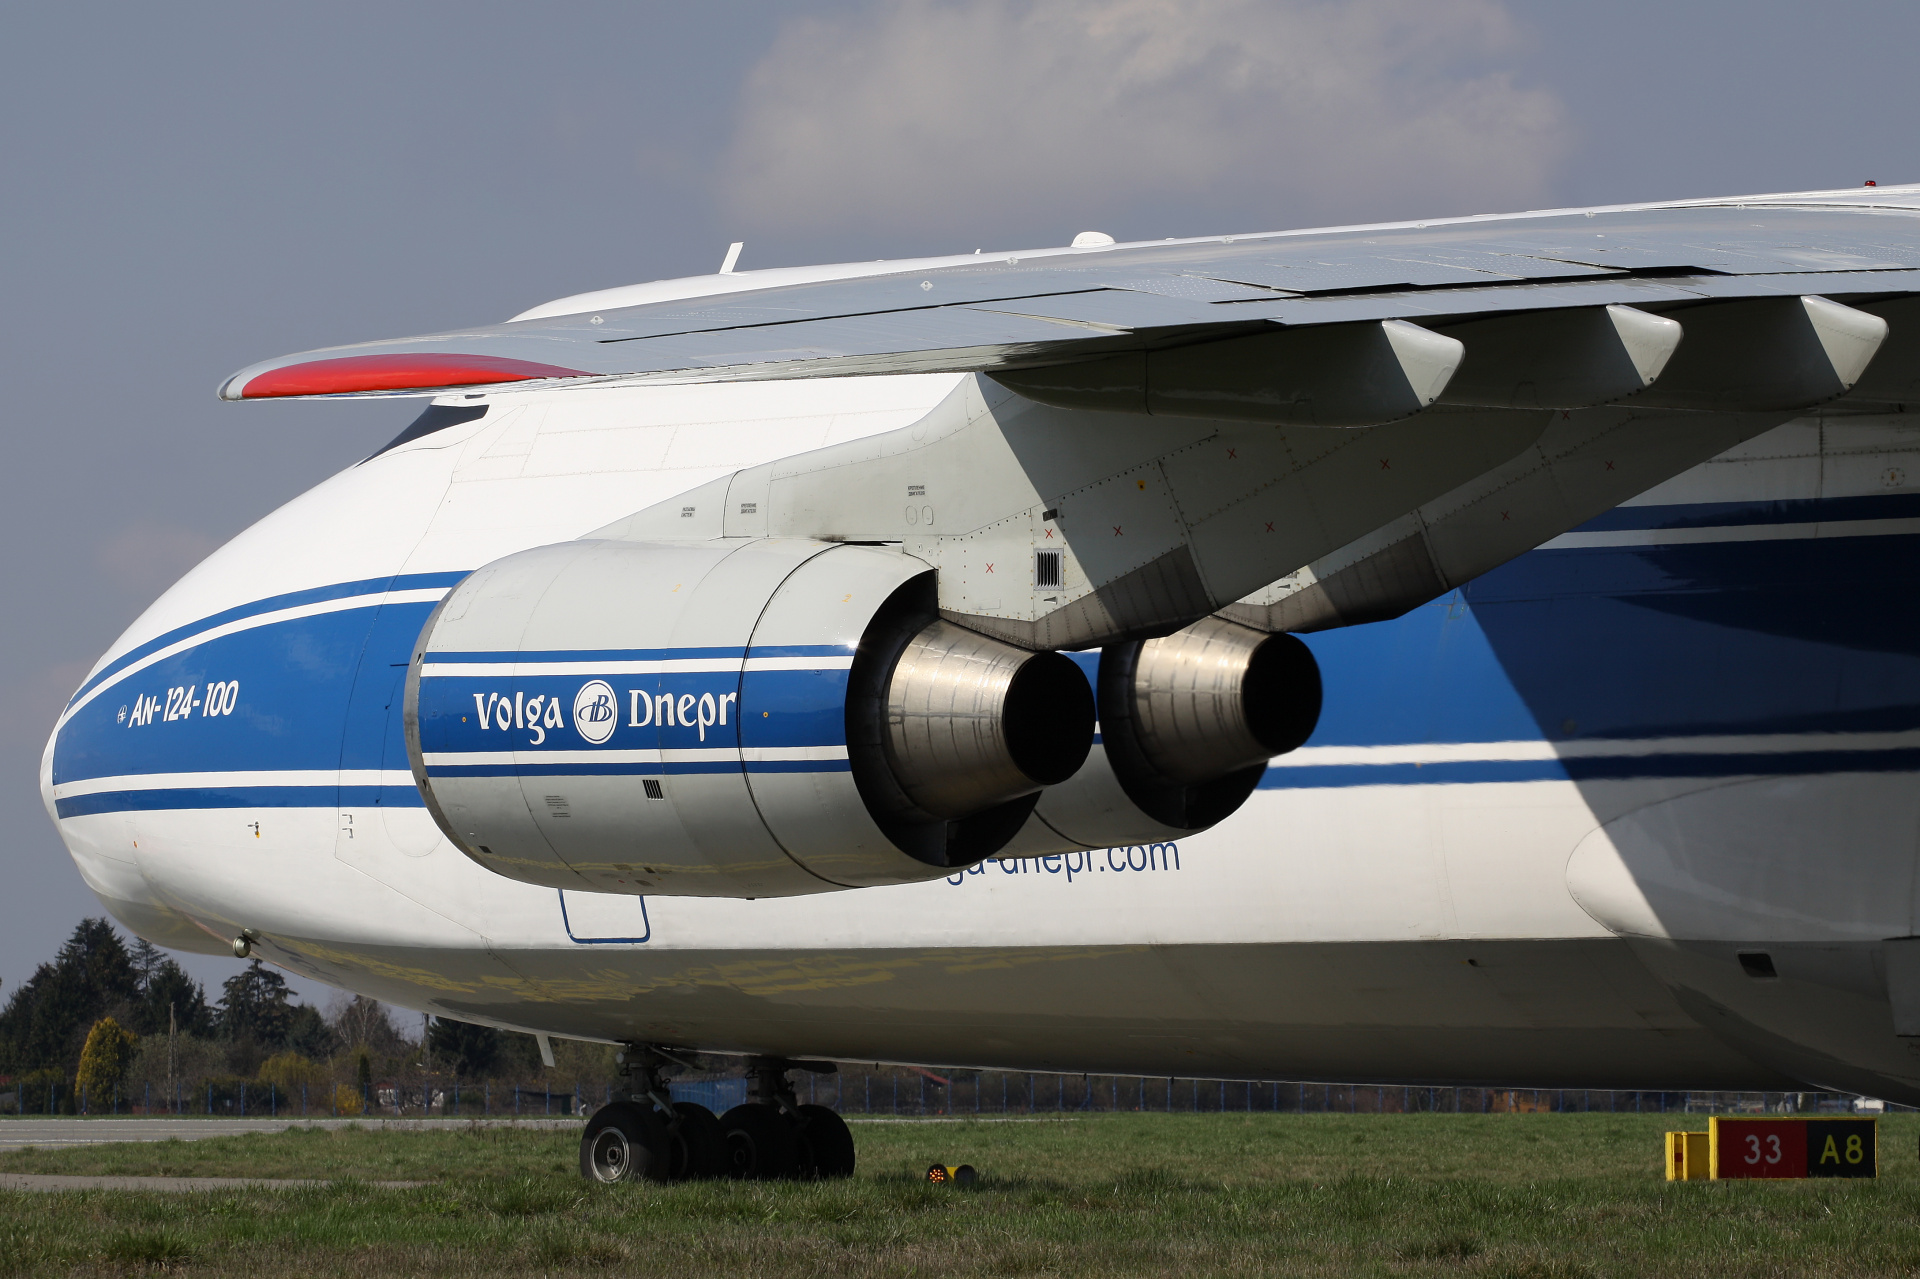 RA-82046 (Aircraft » EPWA Spotting » Antonov An-124-100 Ruslan » Volga Dnepr Airlines)